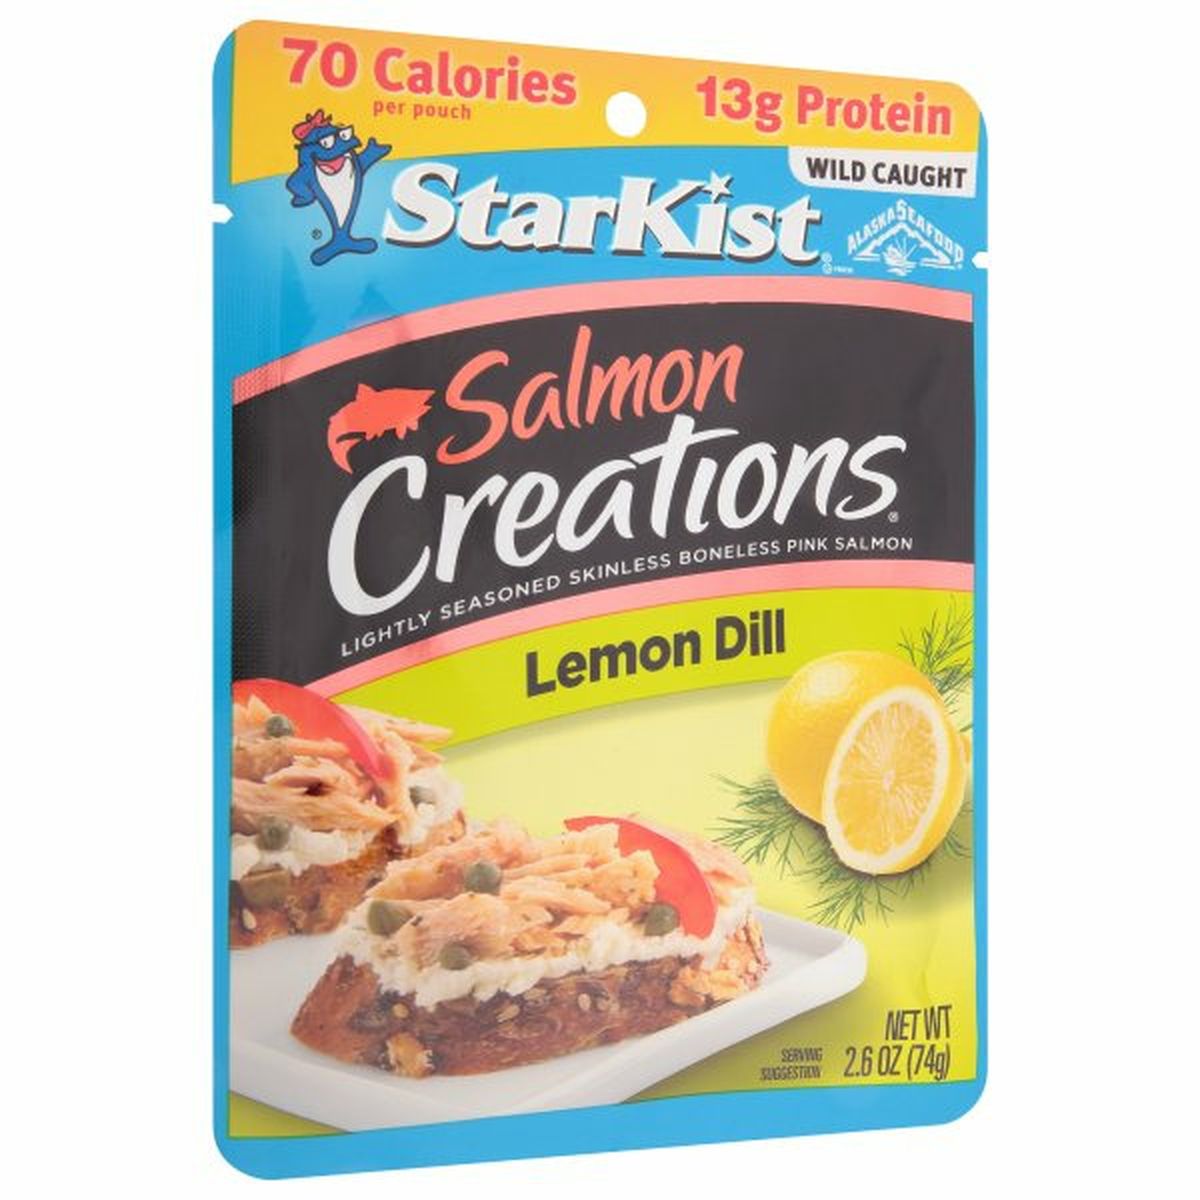 Calories in StarKist Salmon Creations Pink Salmon, Lemon Dill